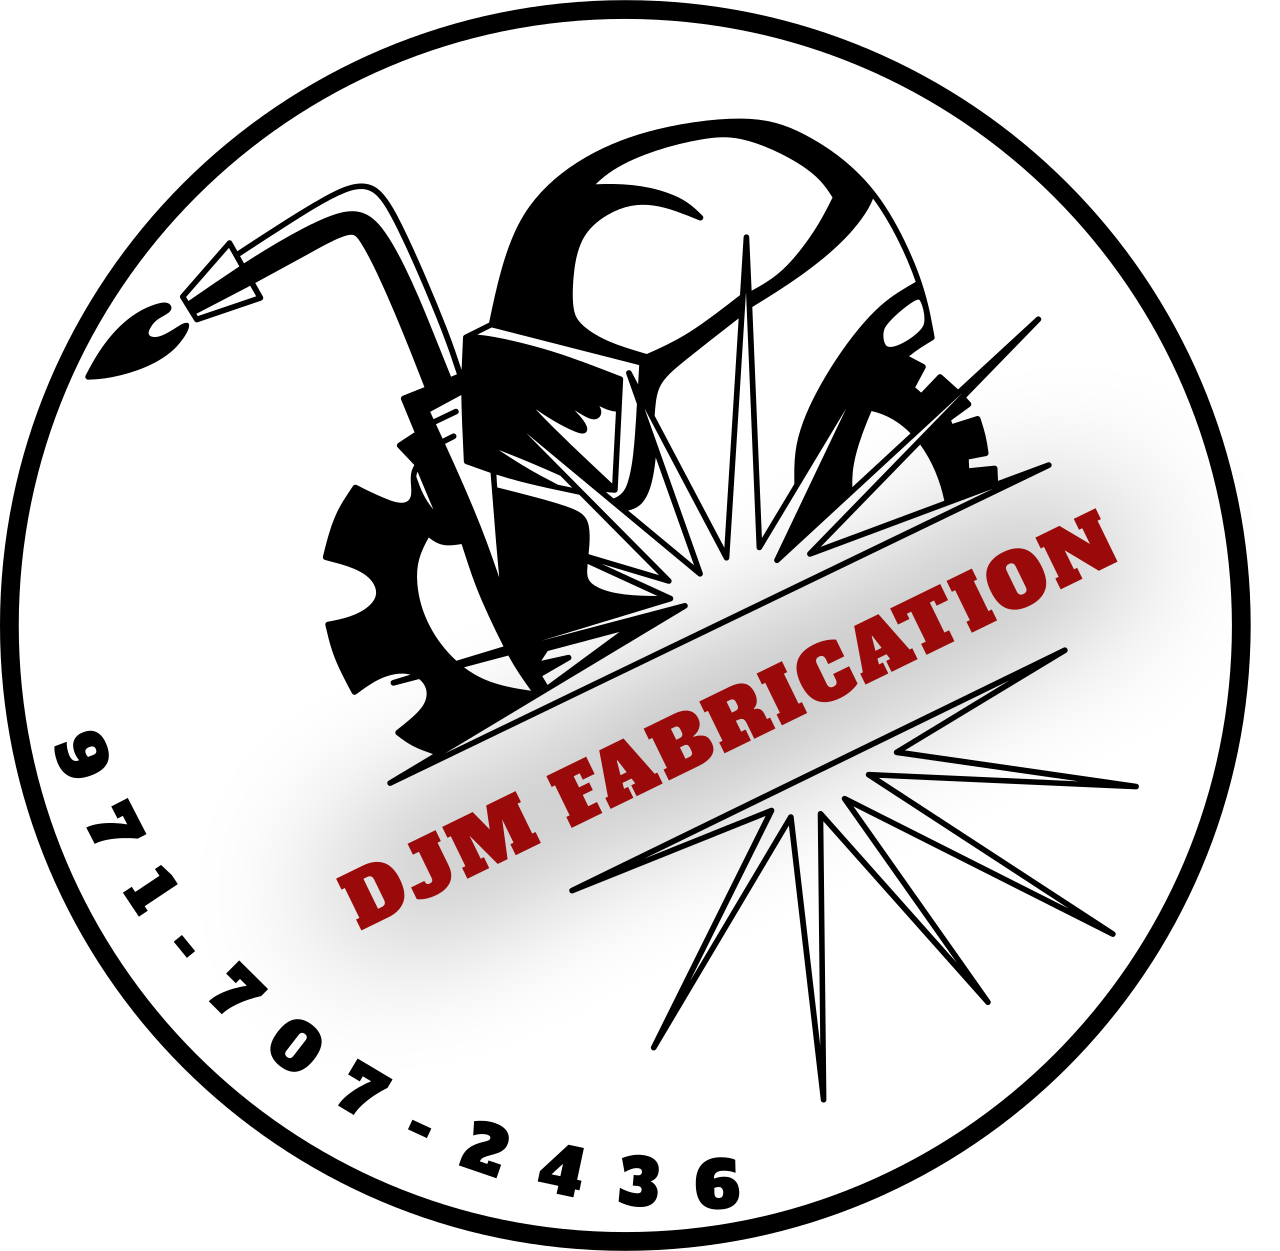 DJM Fabrication's web page